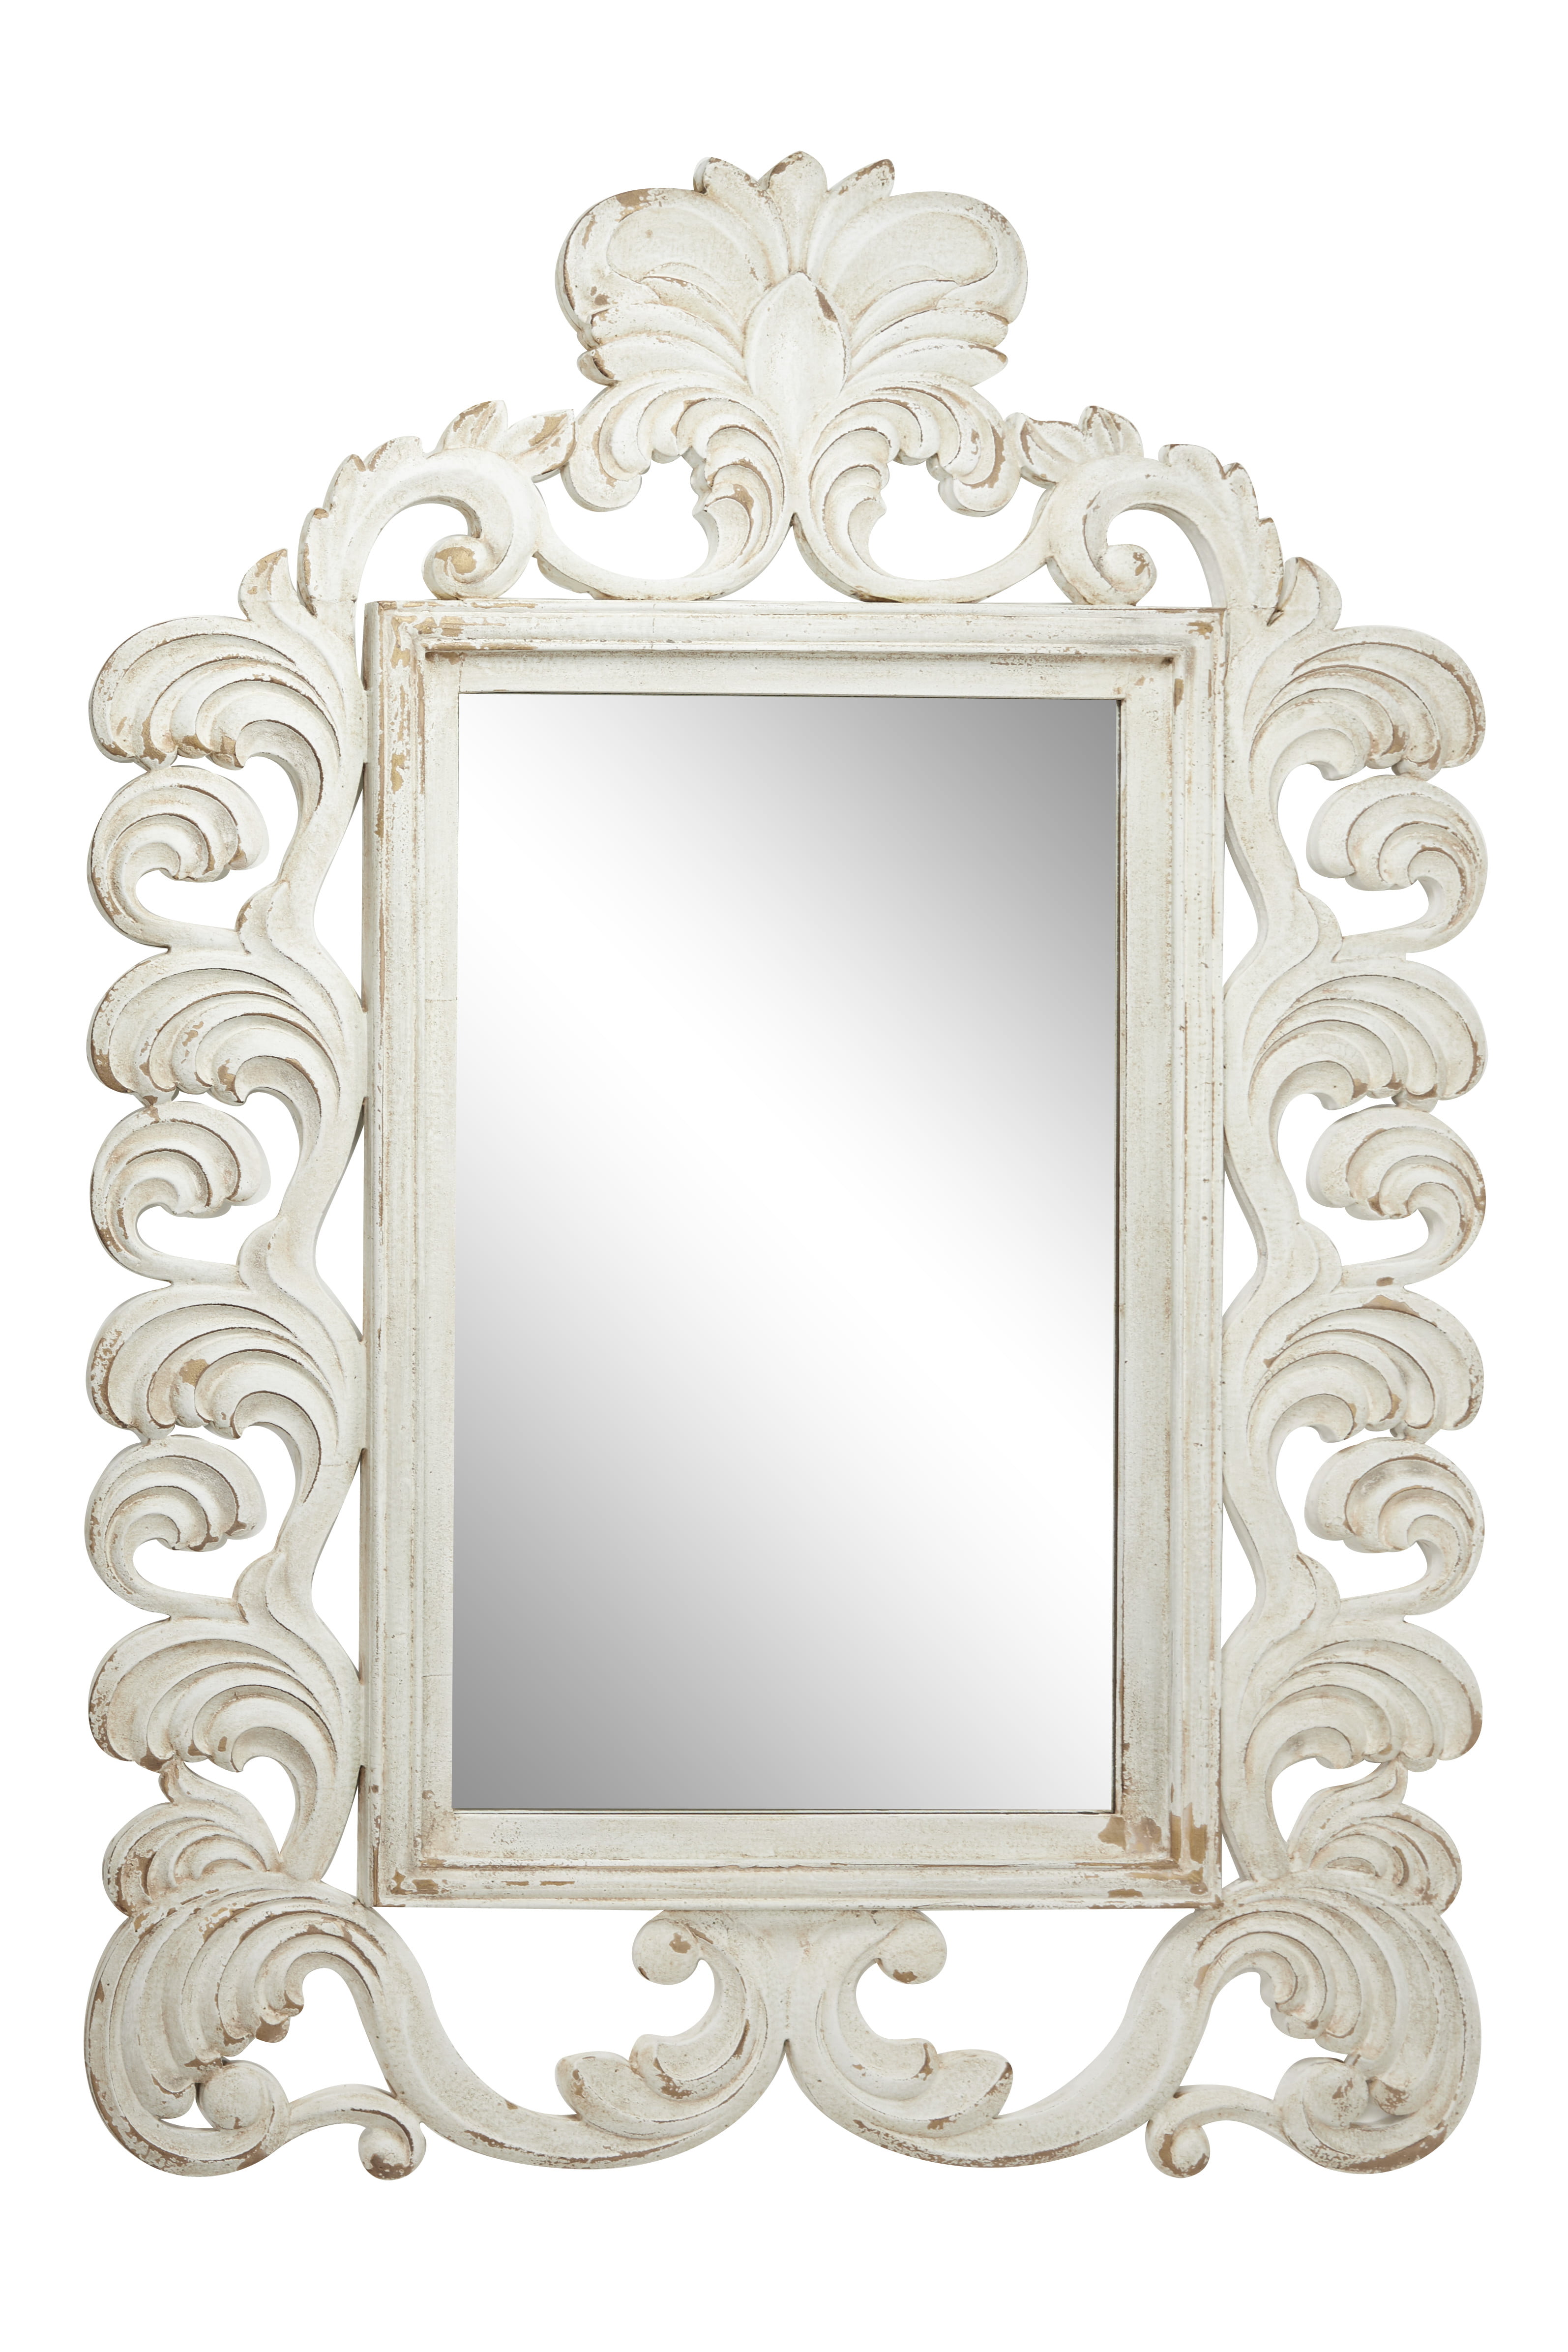 Antique Frame Wall Mirror, Large White Victorian Mirror